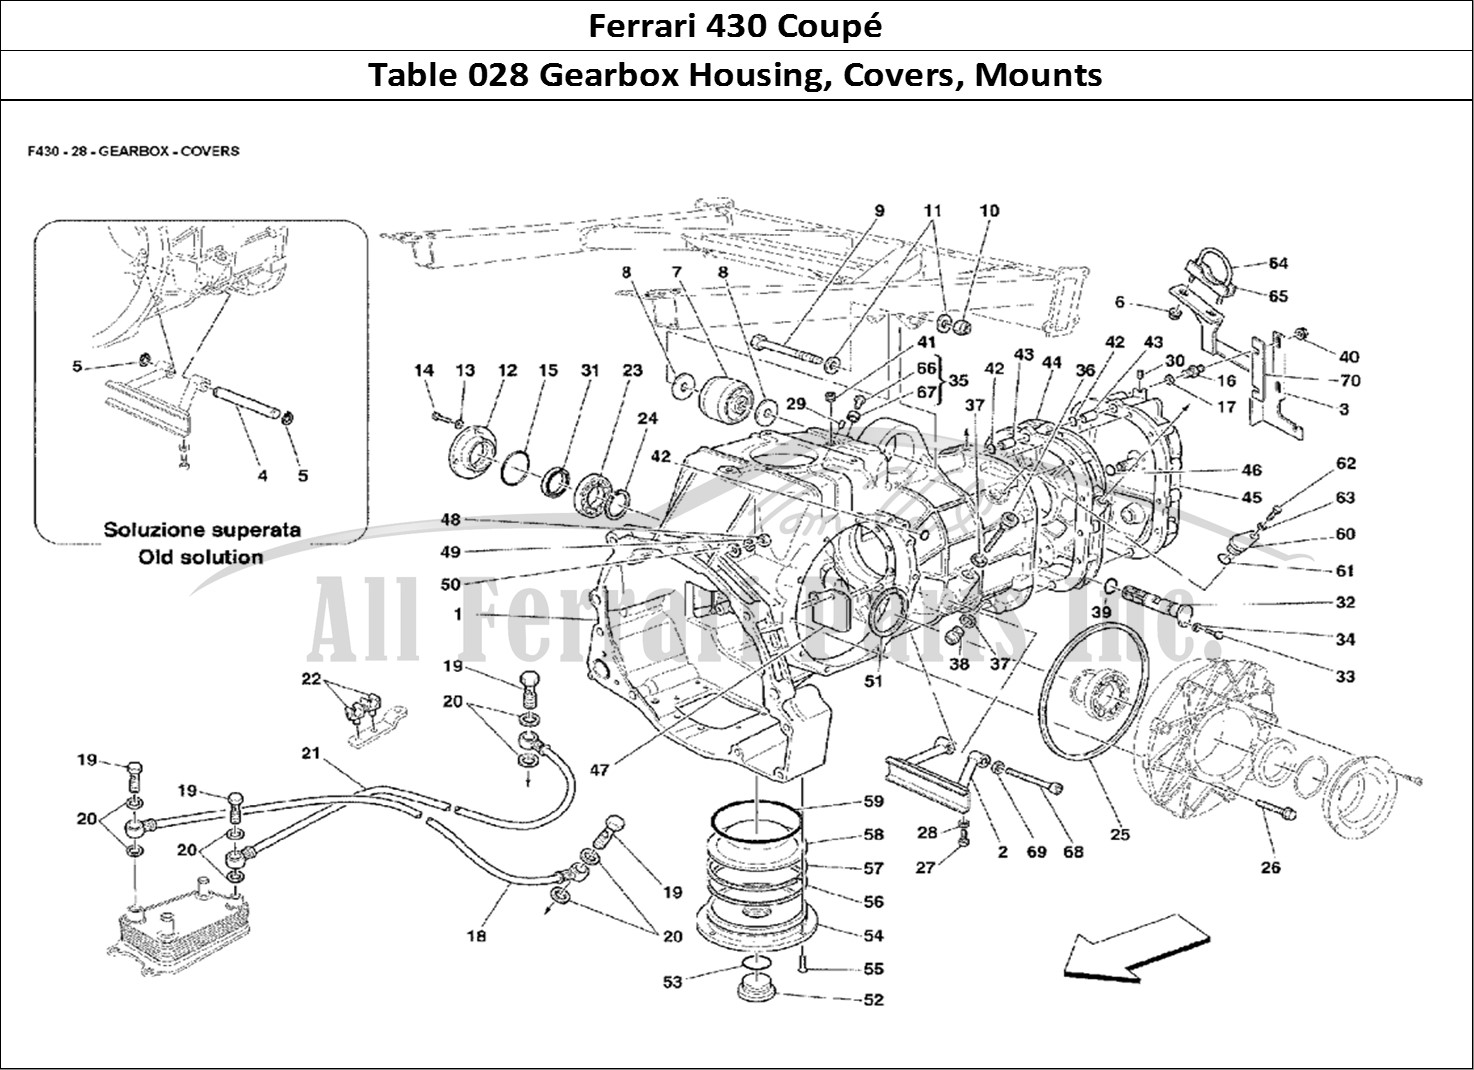 Ferrari Parts Ferrari 430 Coup Page 028 Gearbox - Covers